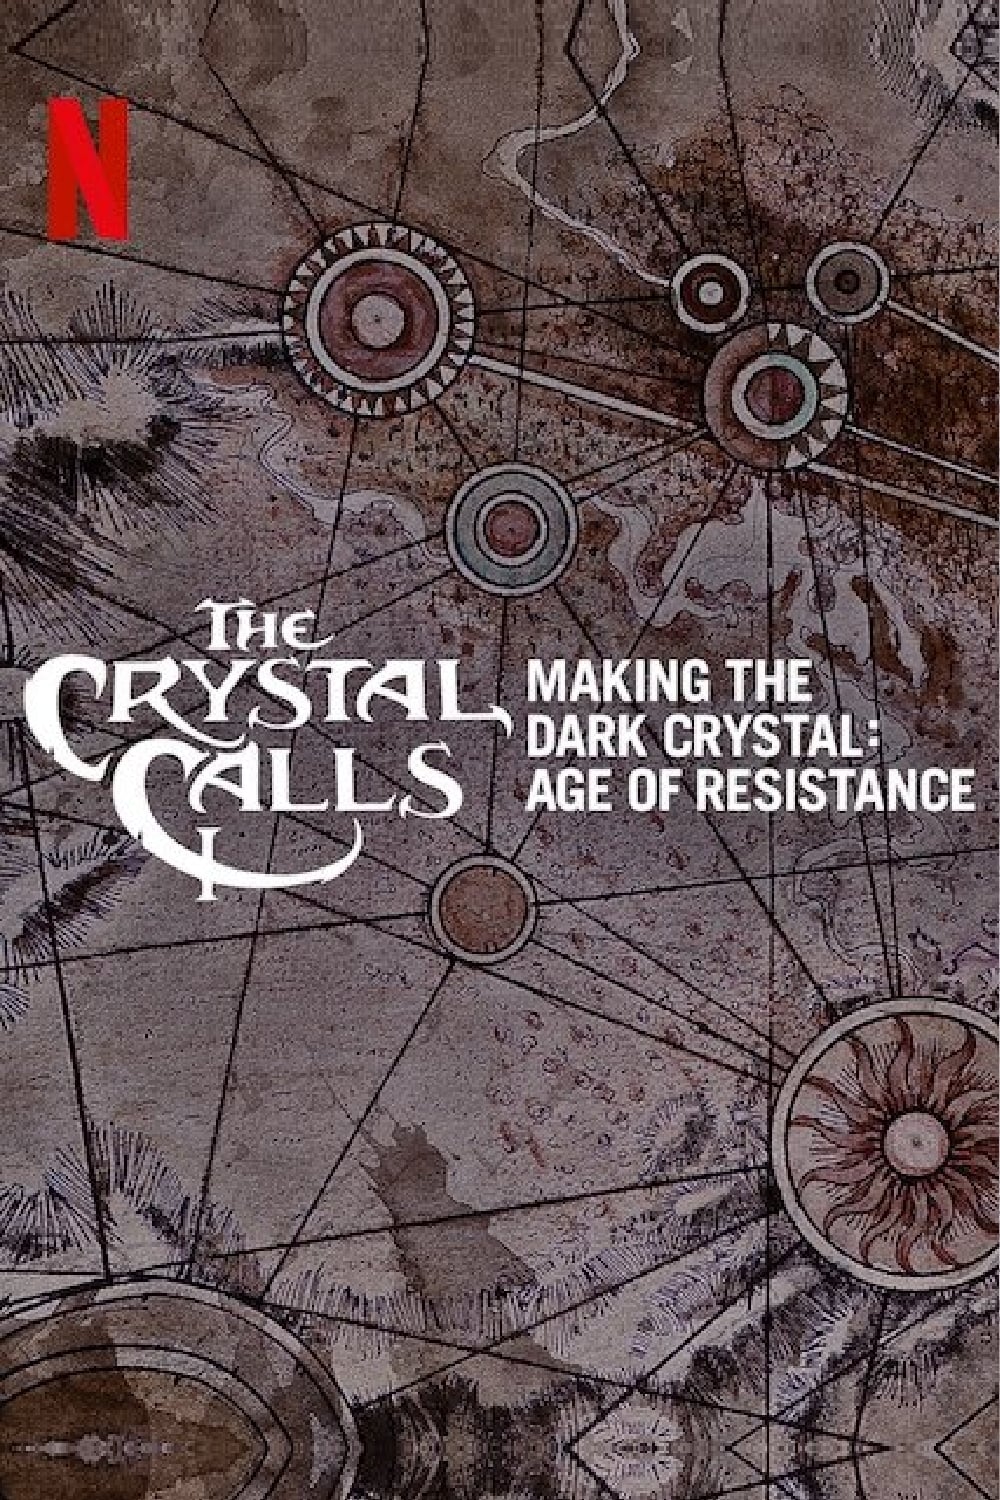 Caratula de THE CRYSTAL CALLS - MAKING THE DARK CRYSTAL: AGE OF RESISTANCE (La llamada del Cristal: Asi se hizo Cristal Oscuro: La era de la resistencia) 